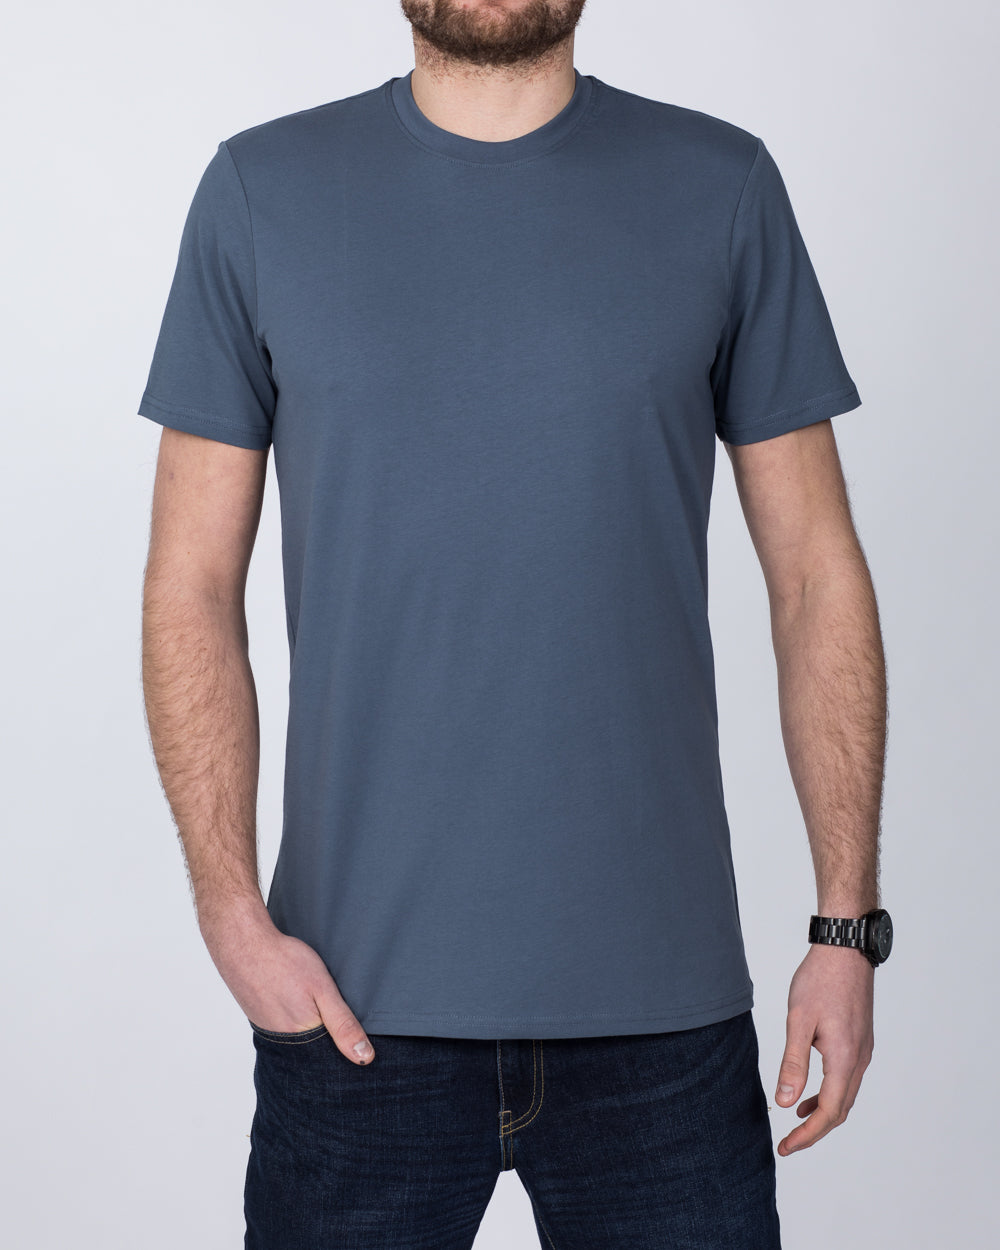 Girav Sydney Tall T-Shirt (stone blue)